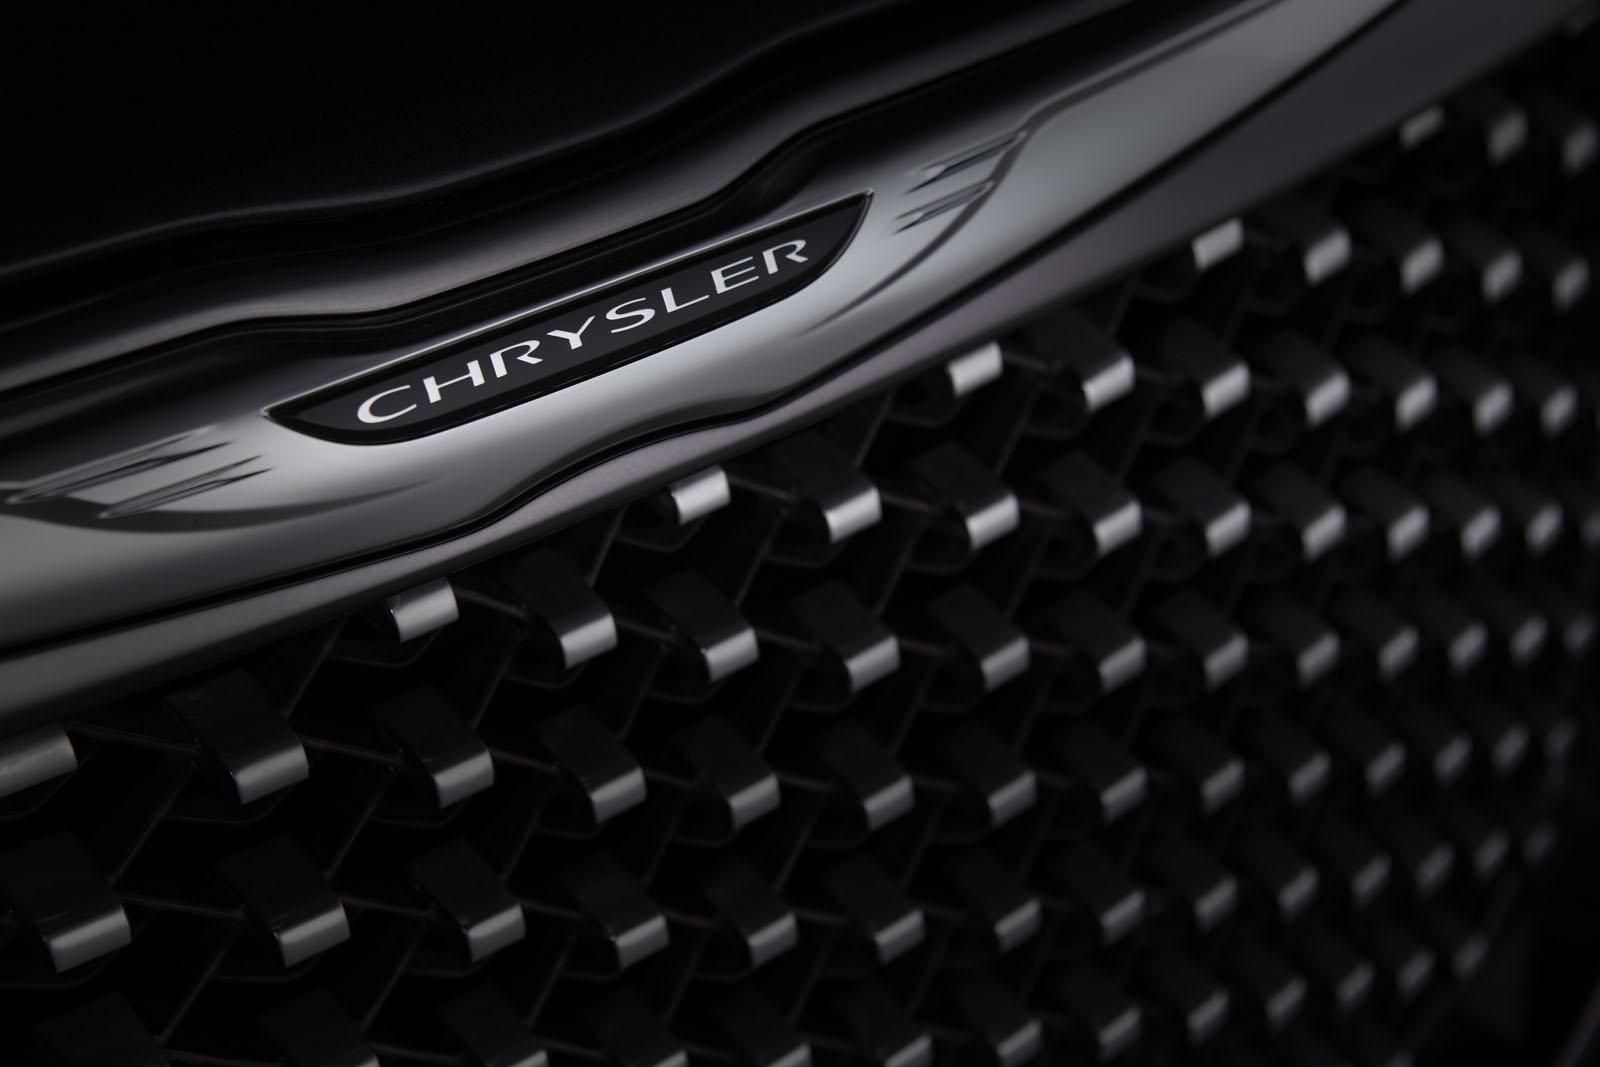 2012 Chrysler 300 Ruyi Design Concept